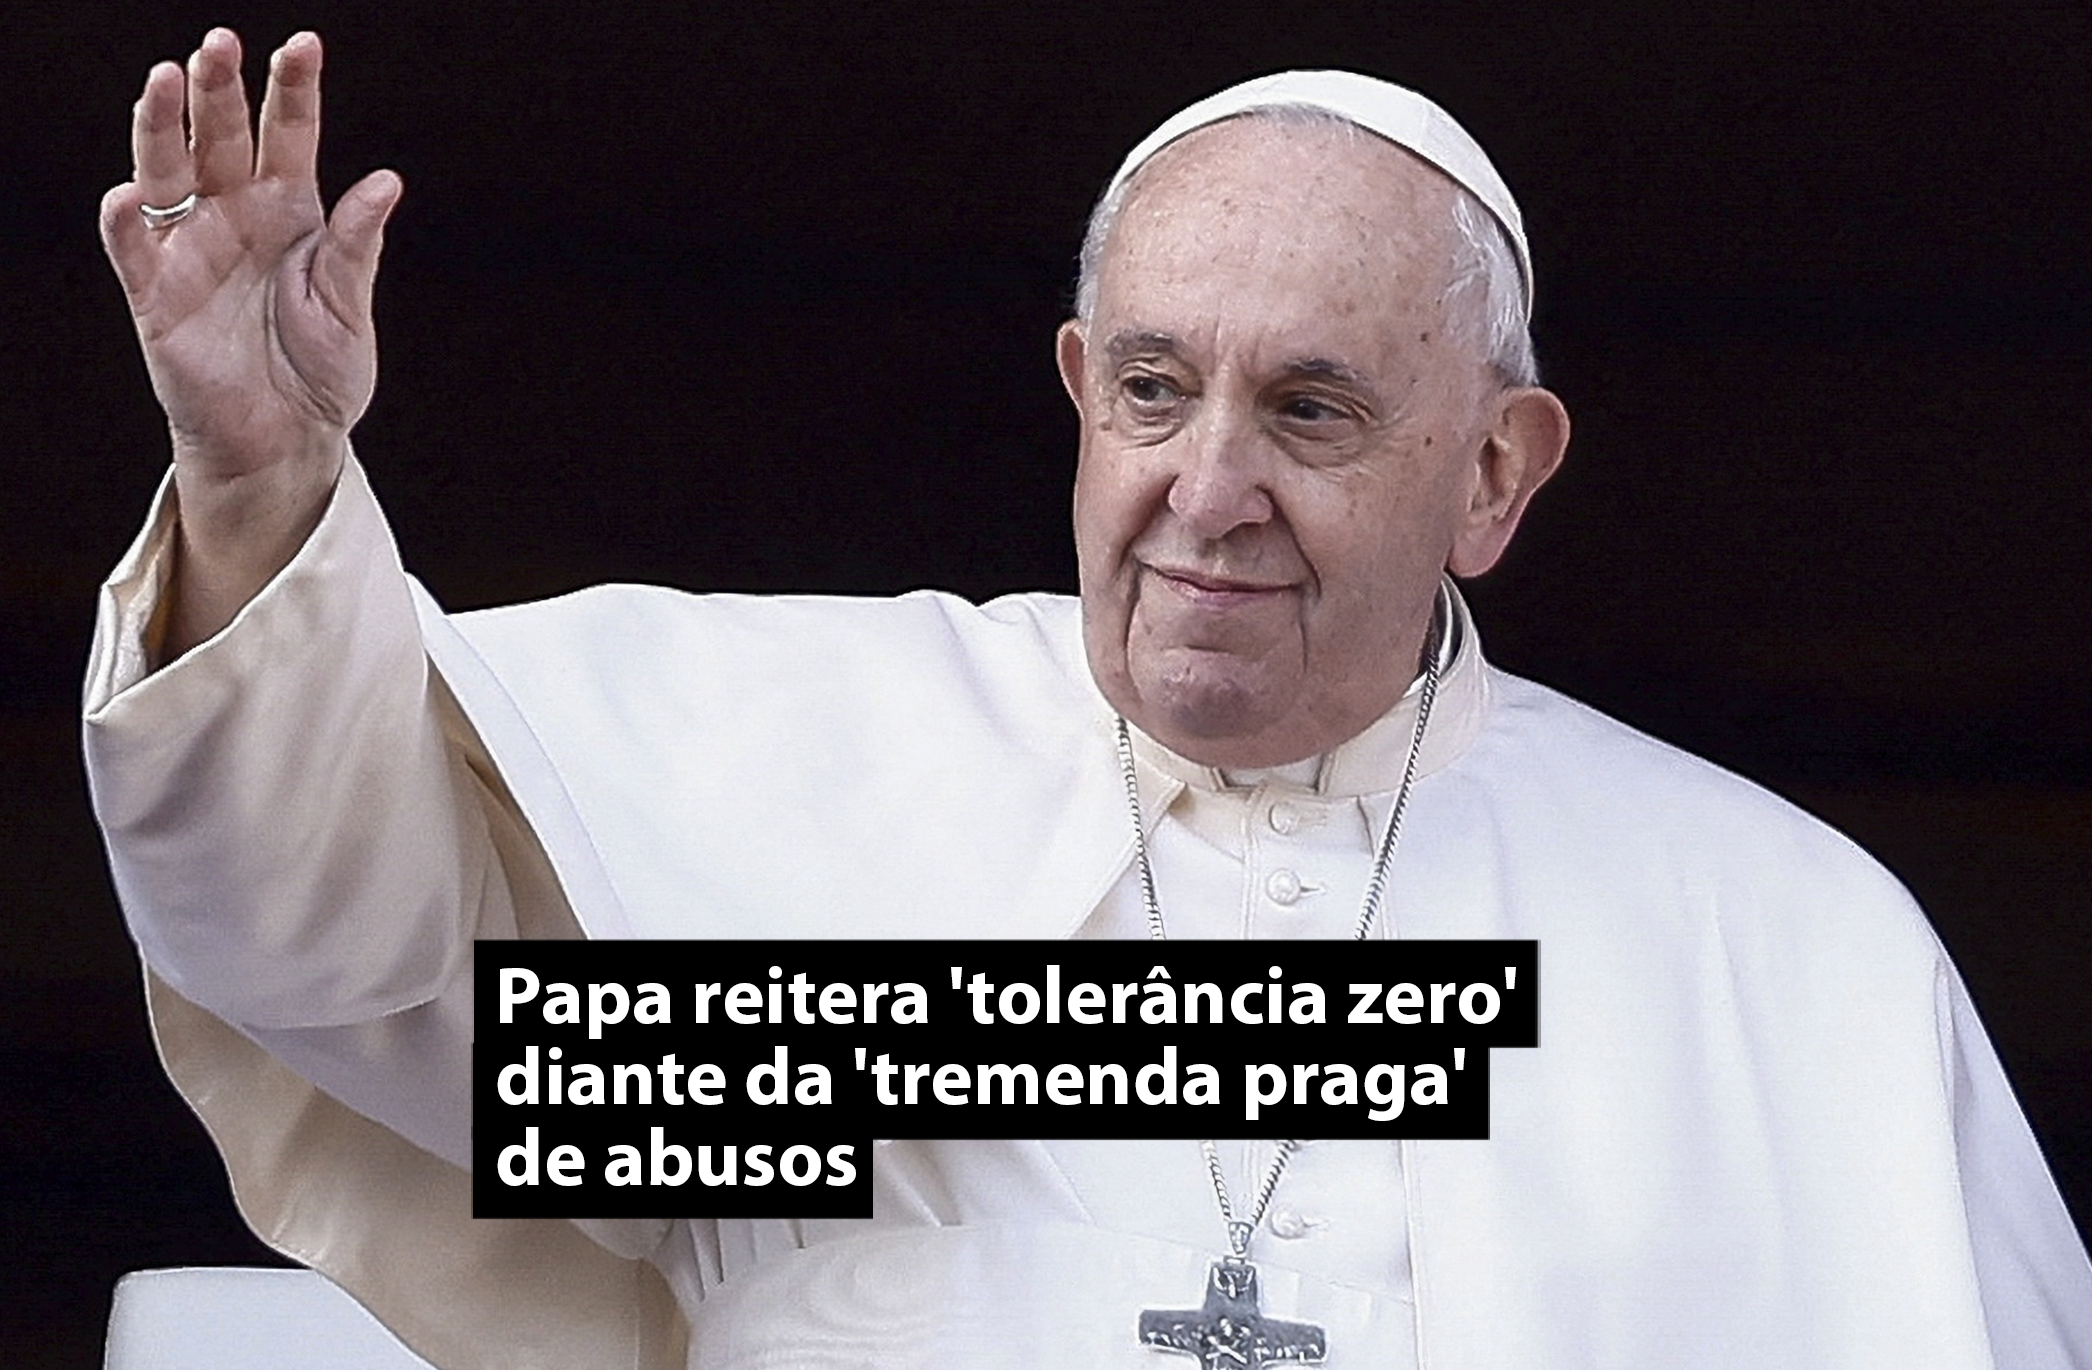 Papa reitera 'tolerância zero' diante da 'tremenda praga' de abusos